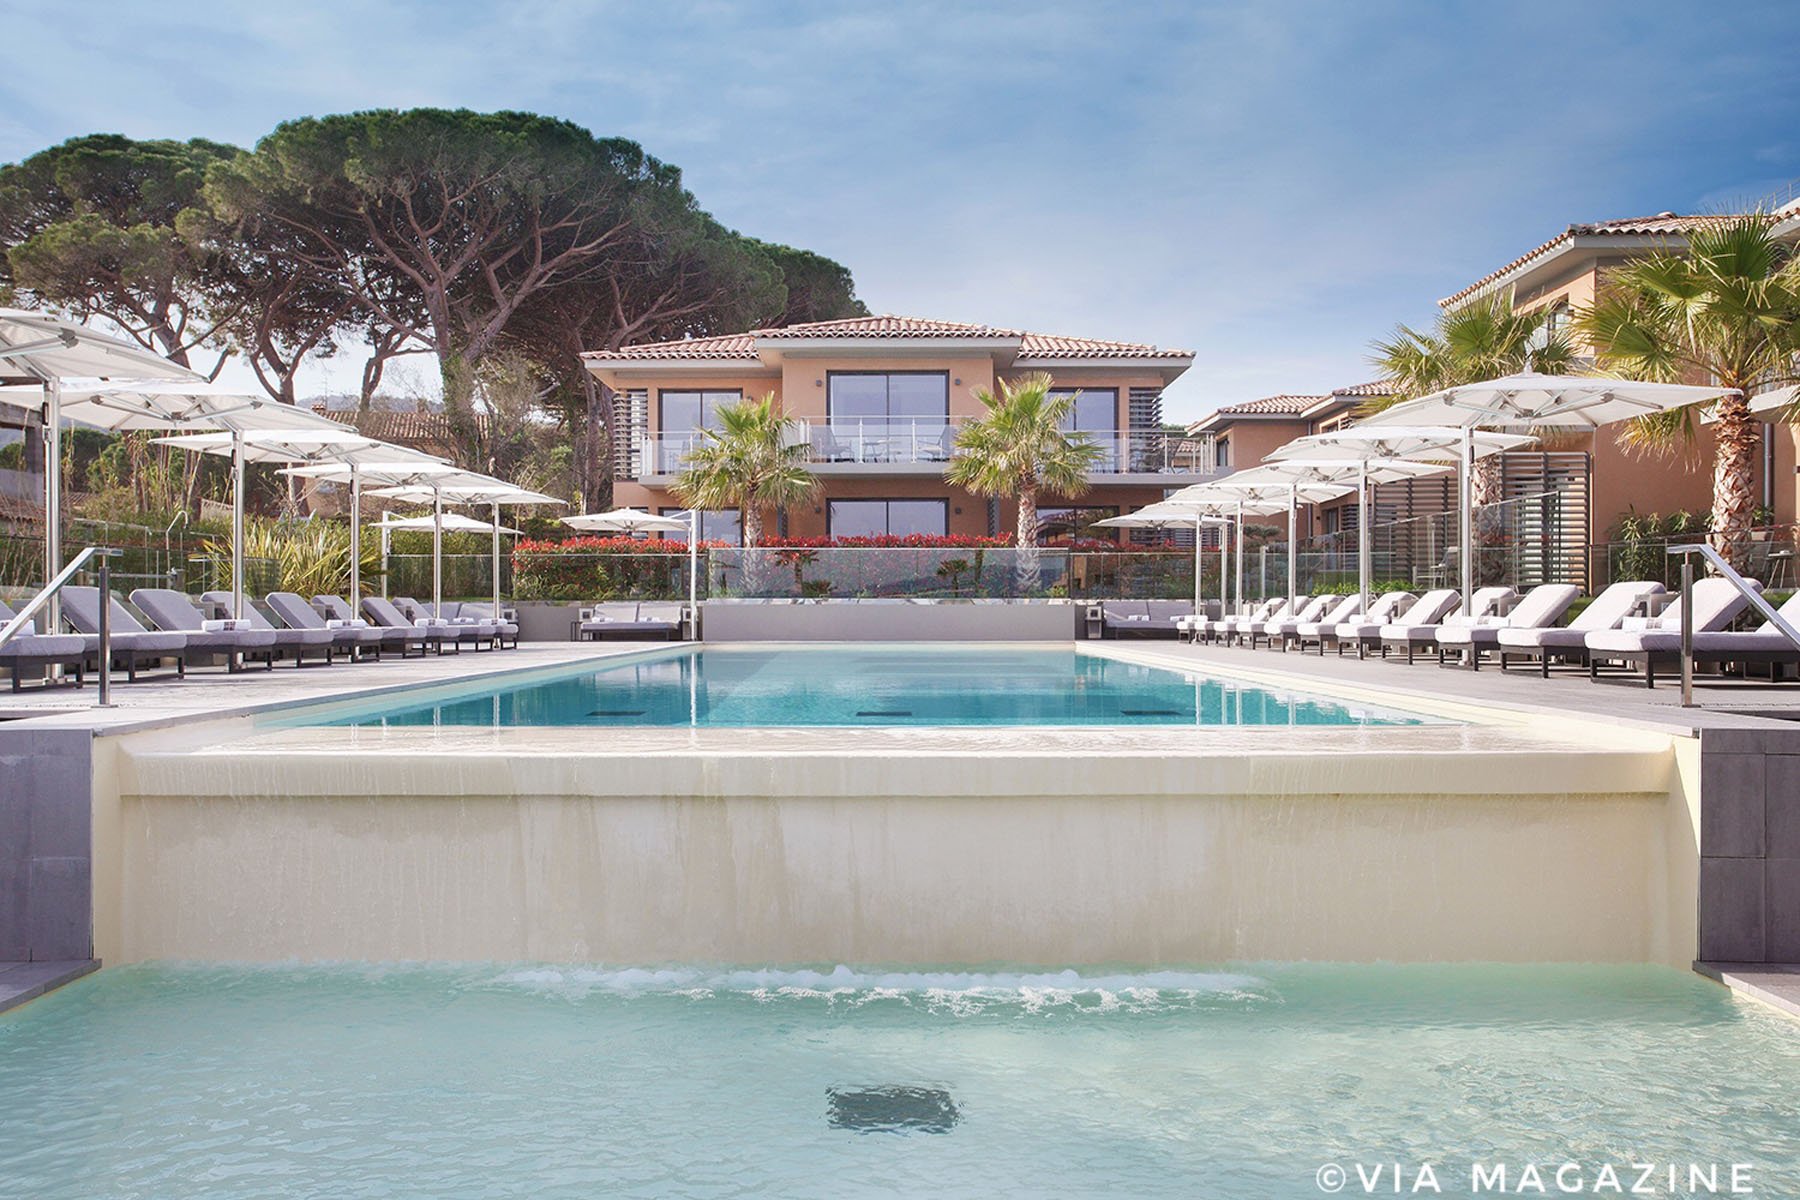 Villa WOOD vue piscine Kube Hotel Saint-Tropez - Côte d'Azur